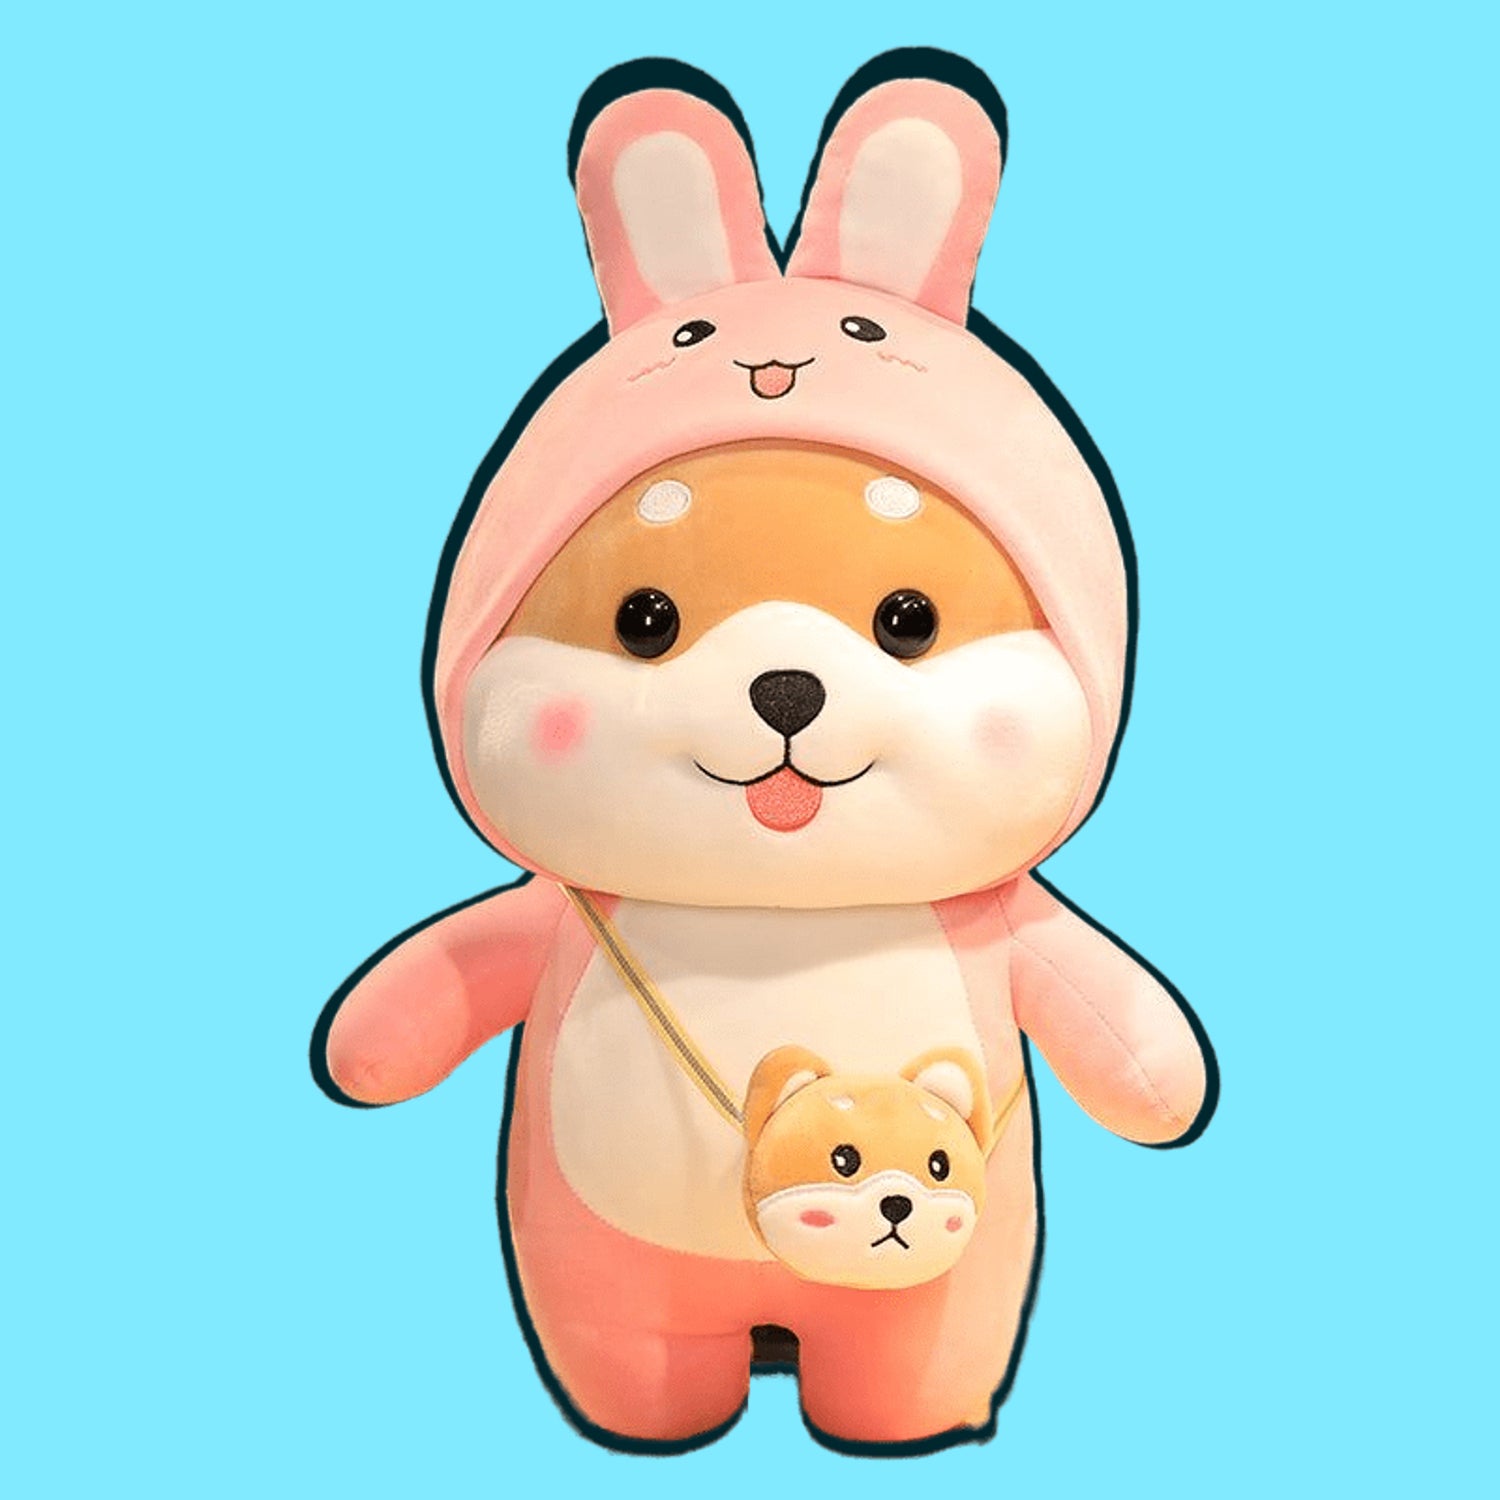 Adorable Shiba Inu Dog Plush